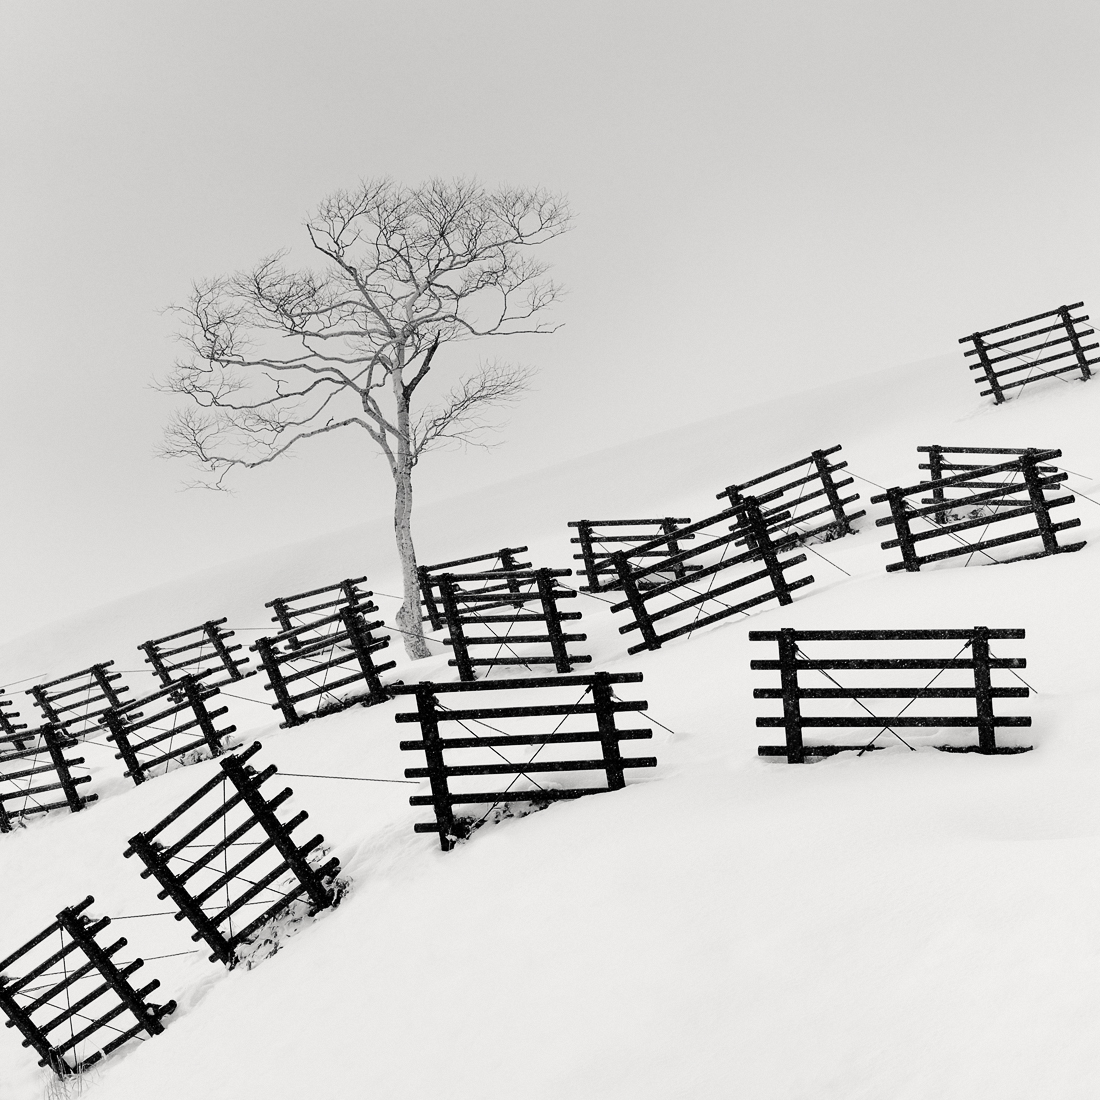 Snow Fences